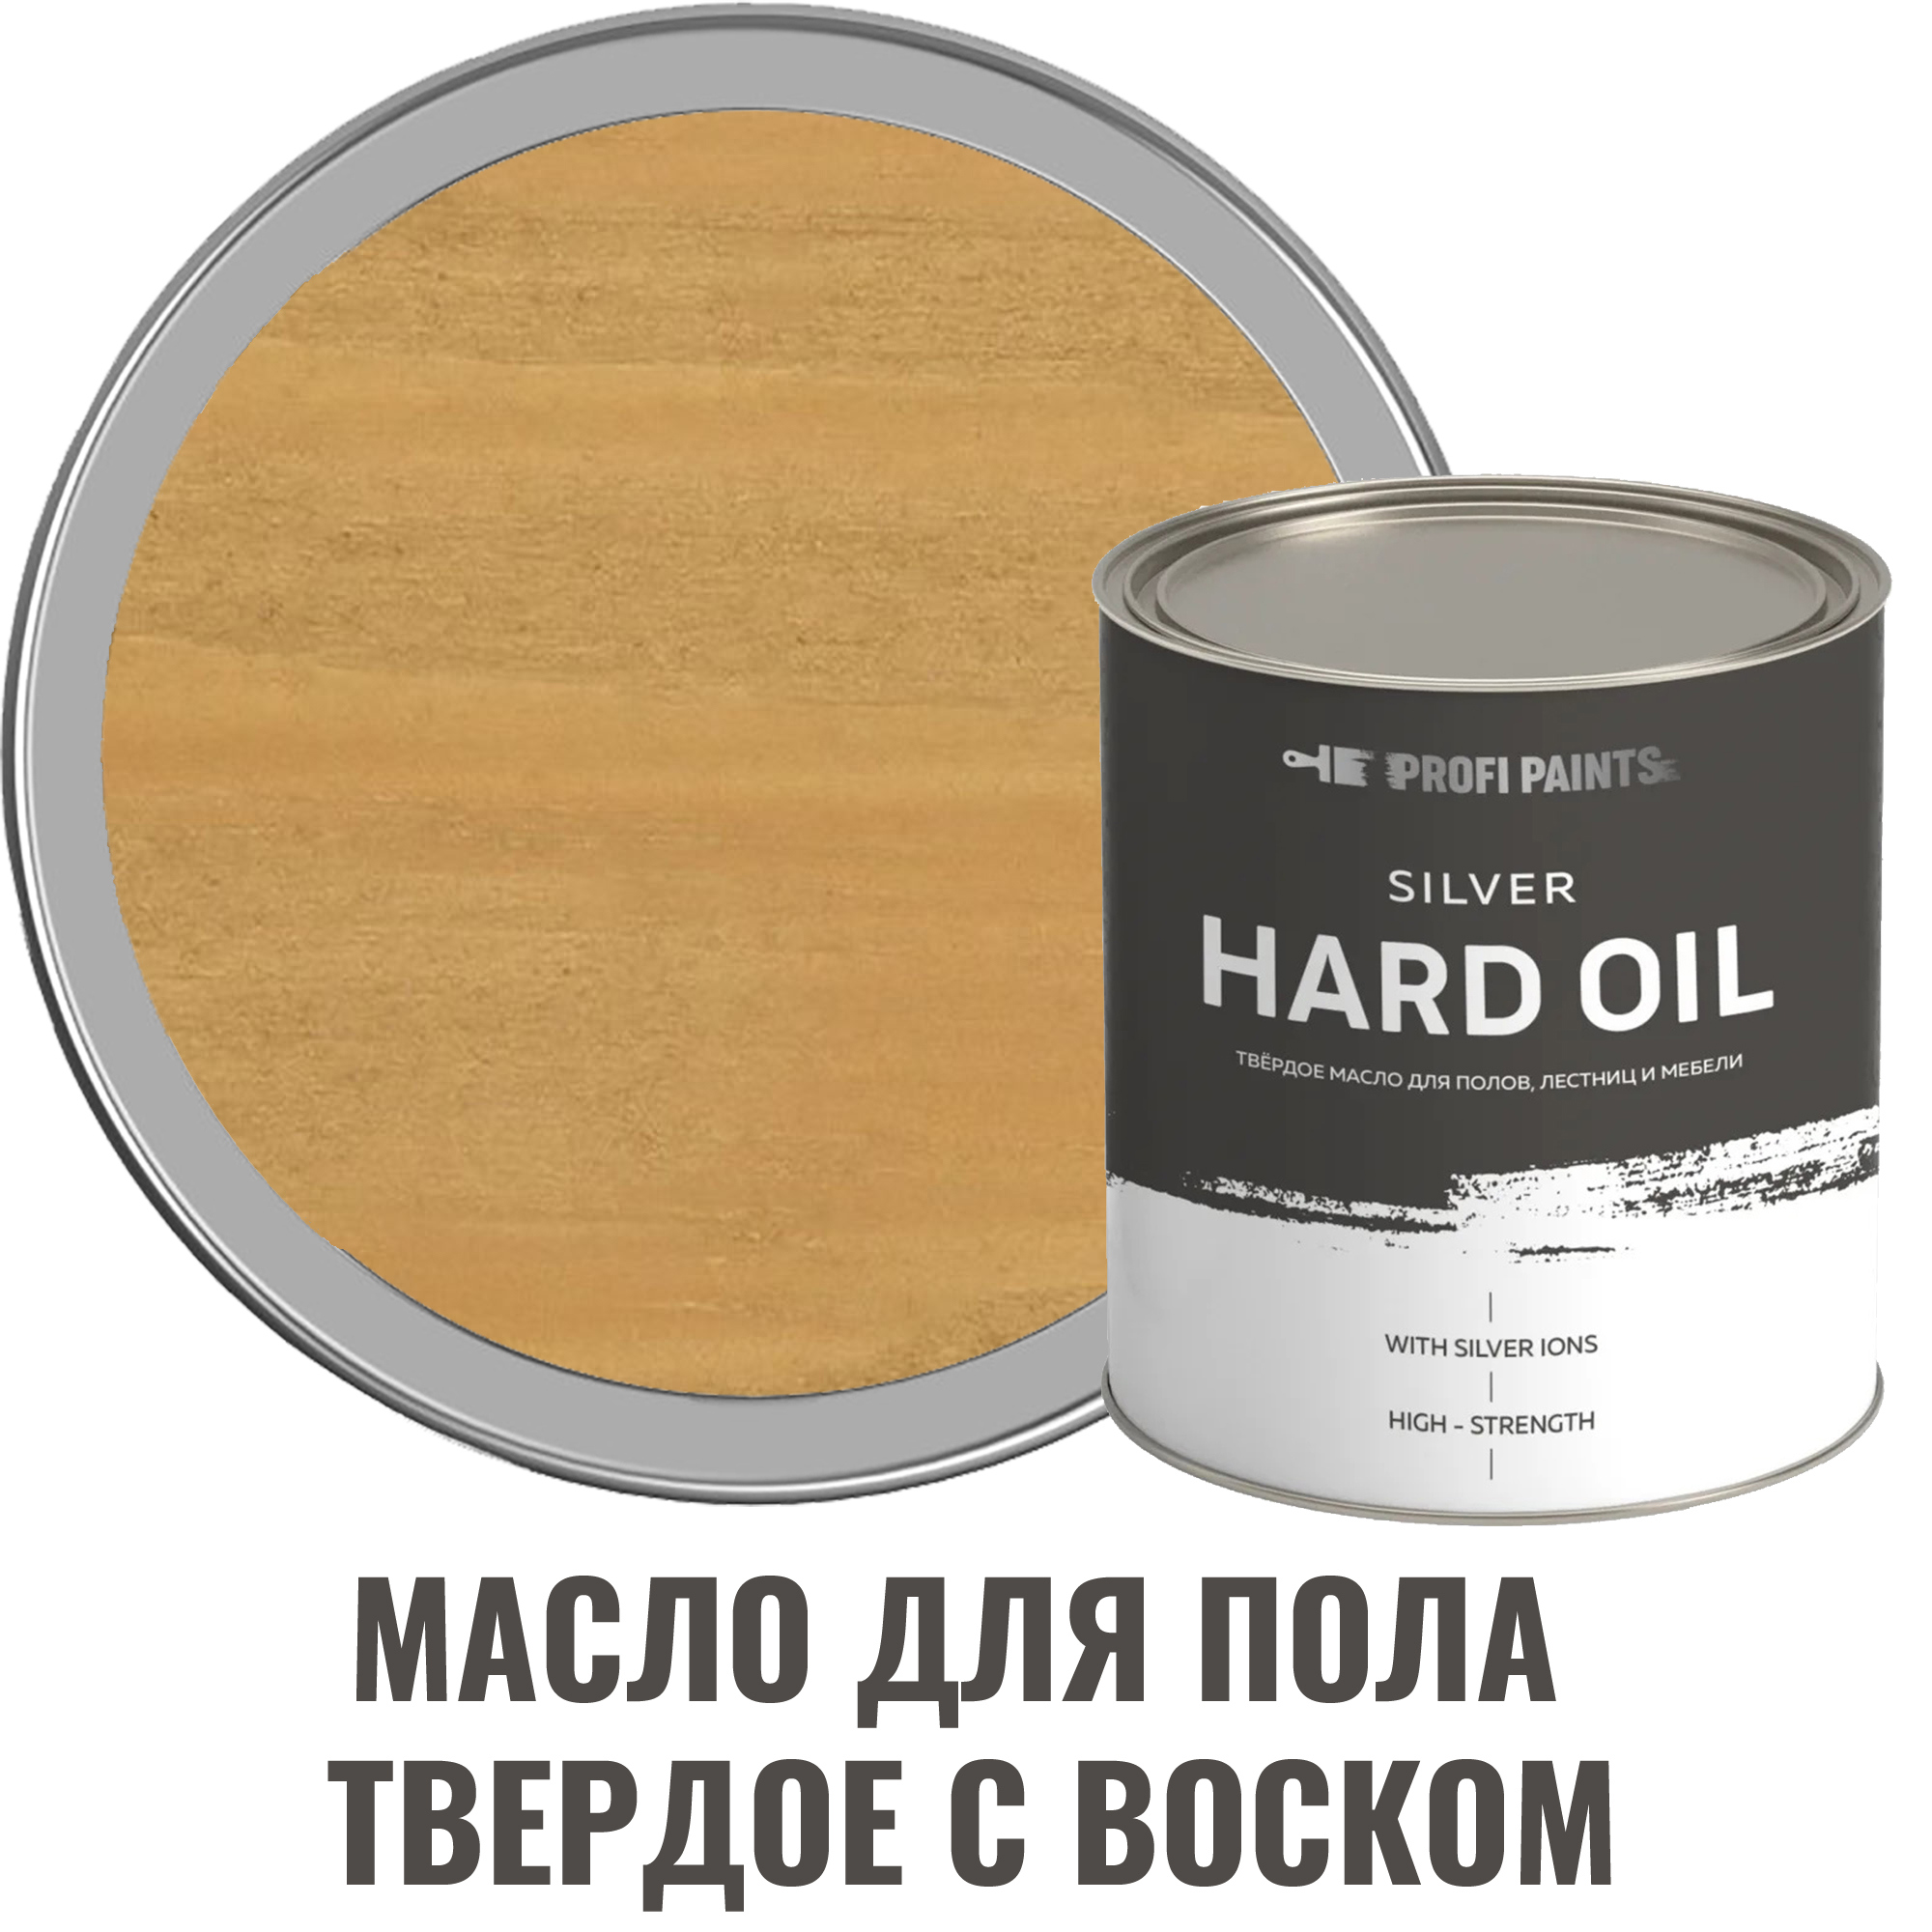 91095484 Масло для пола 10752_D Silver Hard Oil цвет клен 2.7 л STLM-0481841 PROFIPAINTS